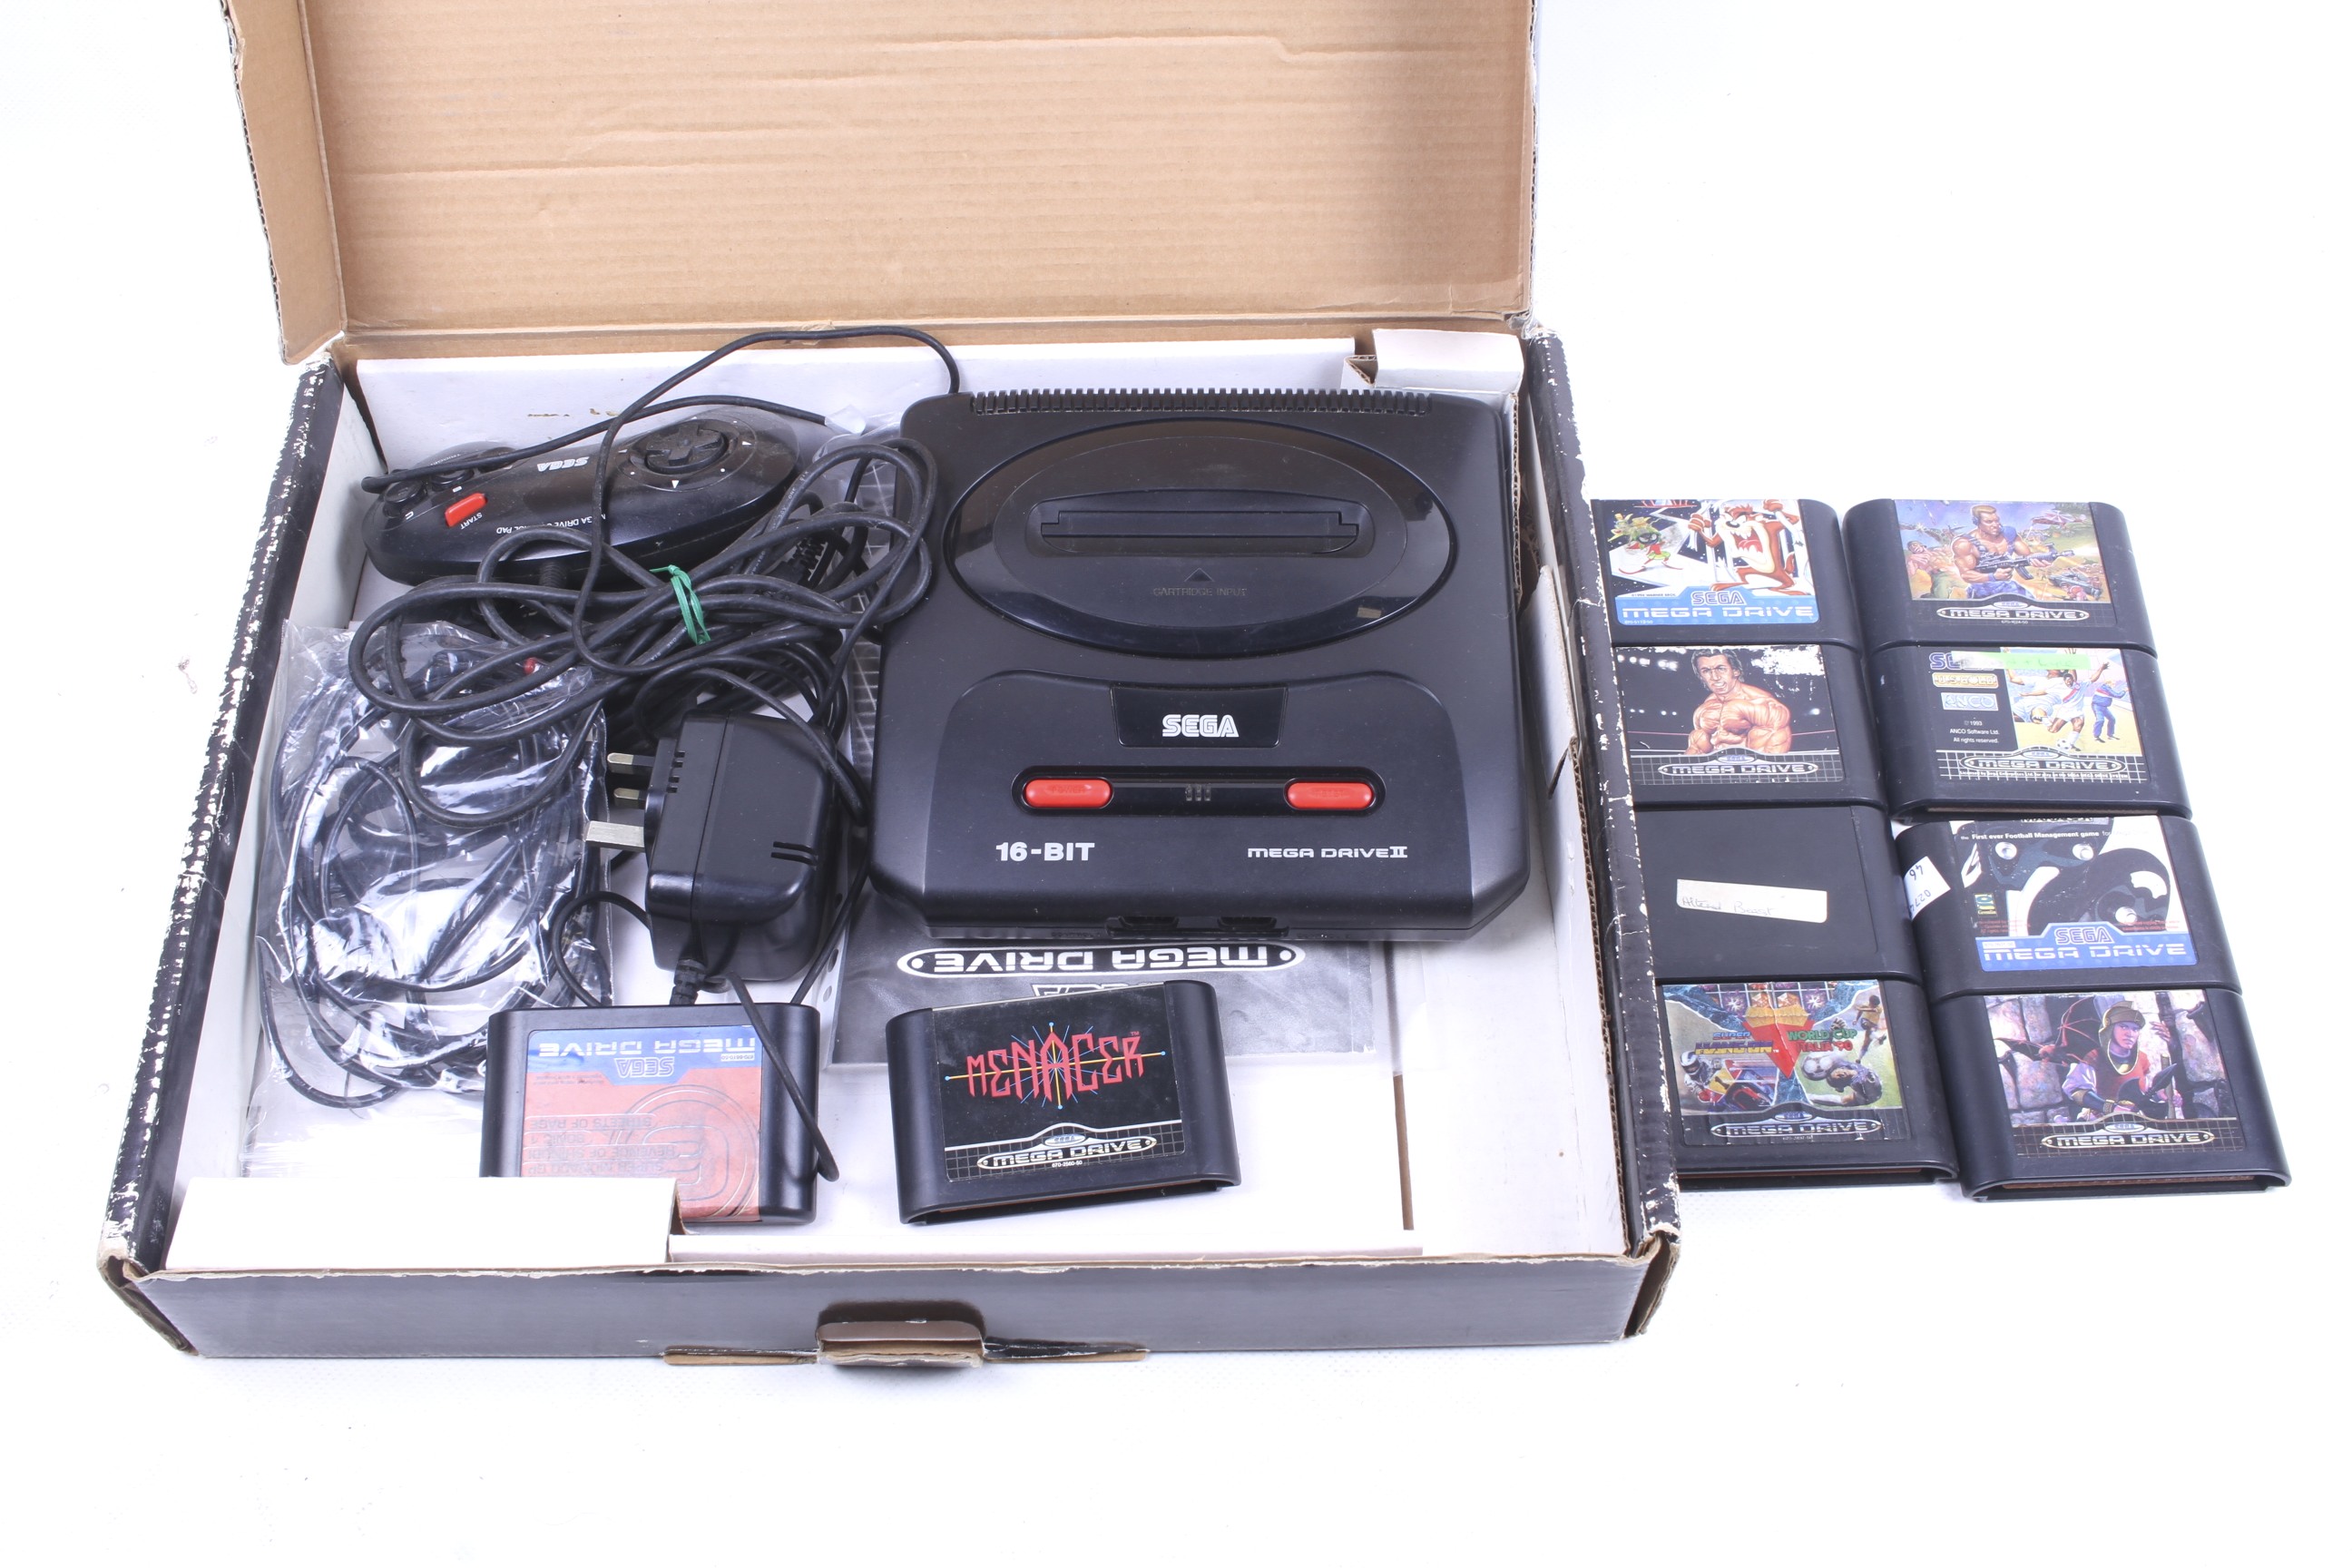 A Sega Mega Drive 2 video game console plus games. - Image 2 of 2